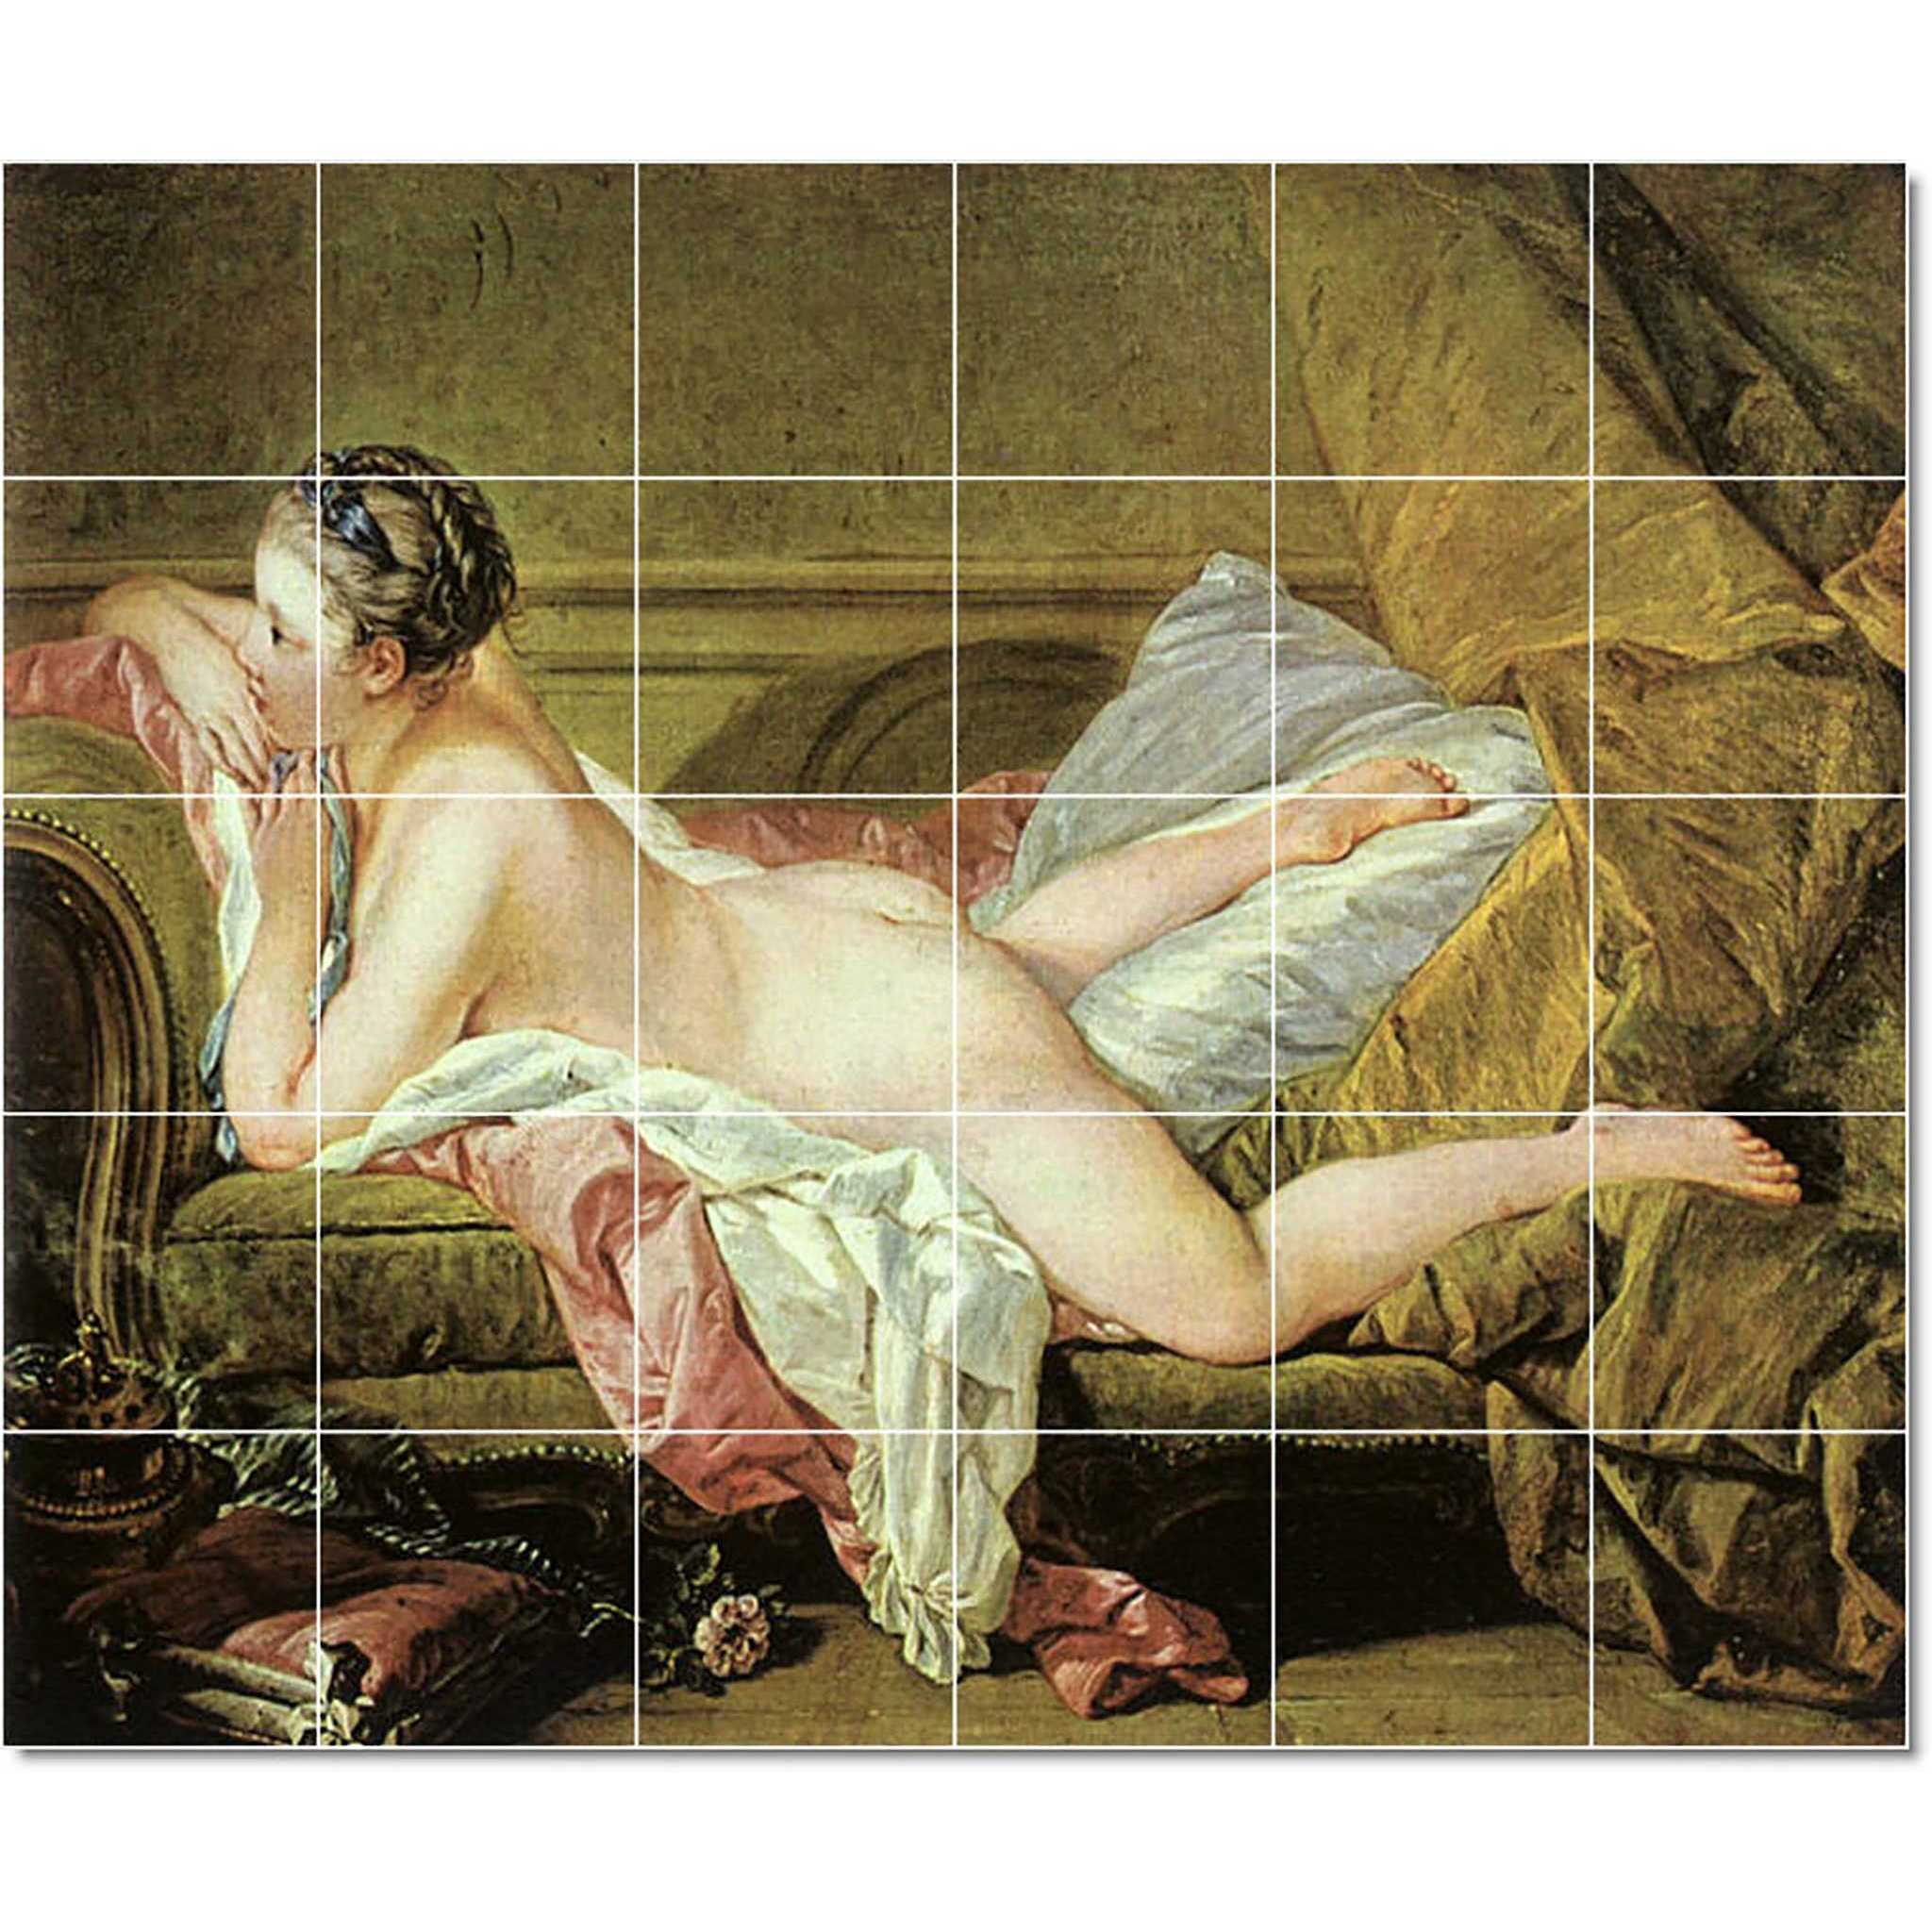 francois boucher nude painting ceramic tile mural p22148